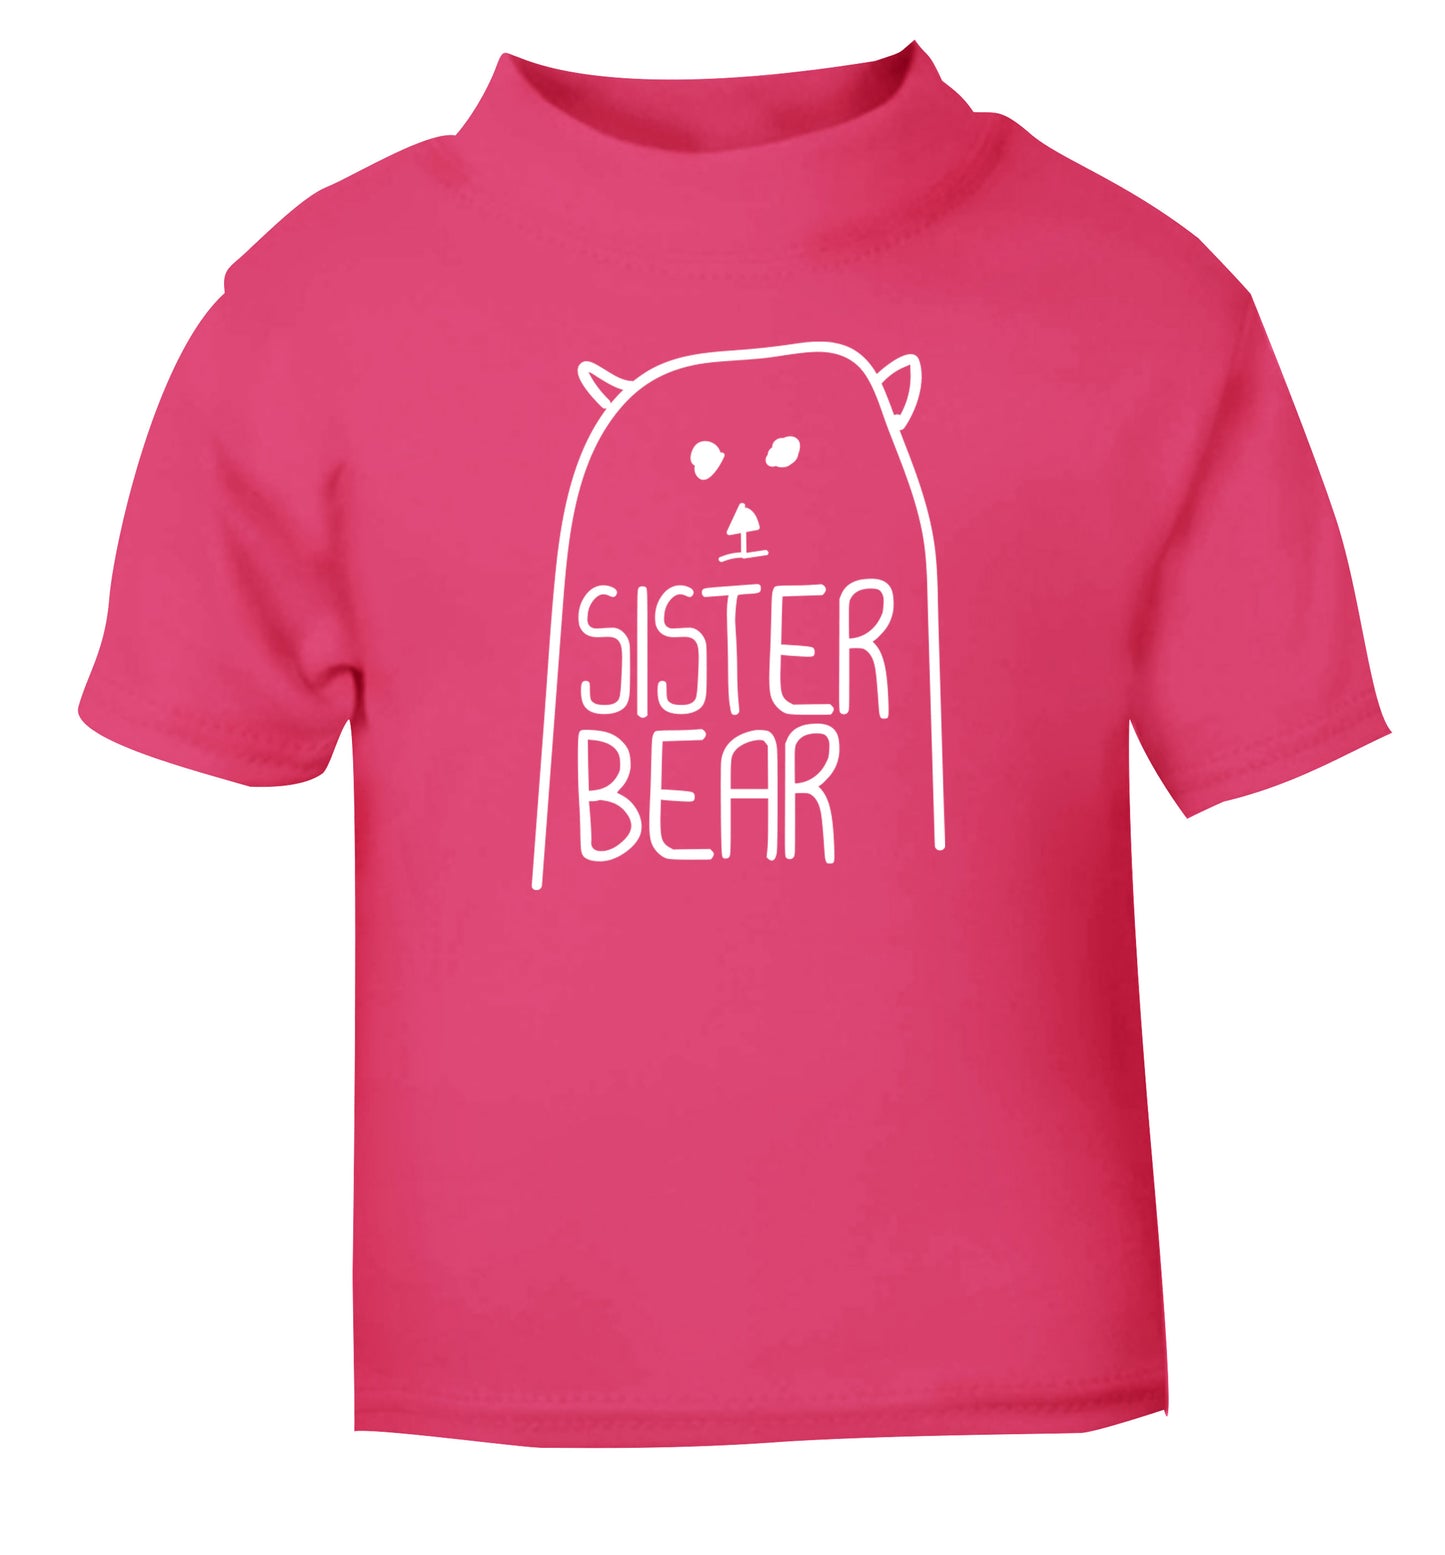 Sister bear pink Baby Toddler Tshirt 2 Years